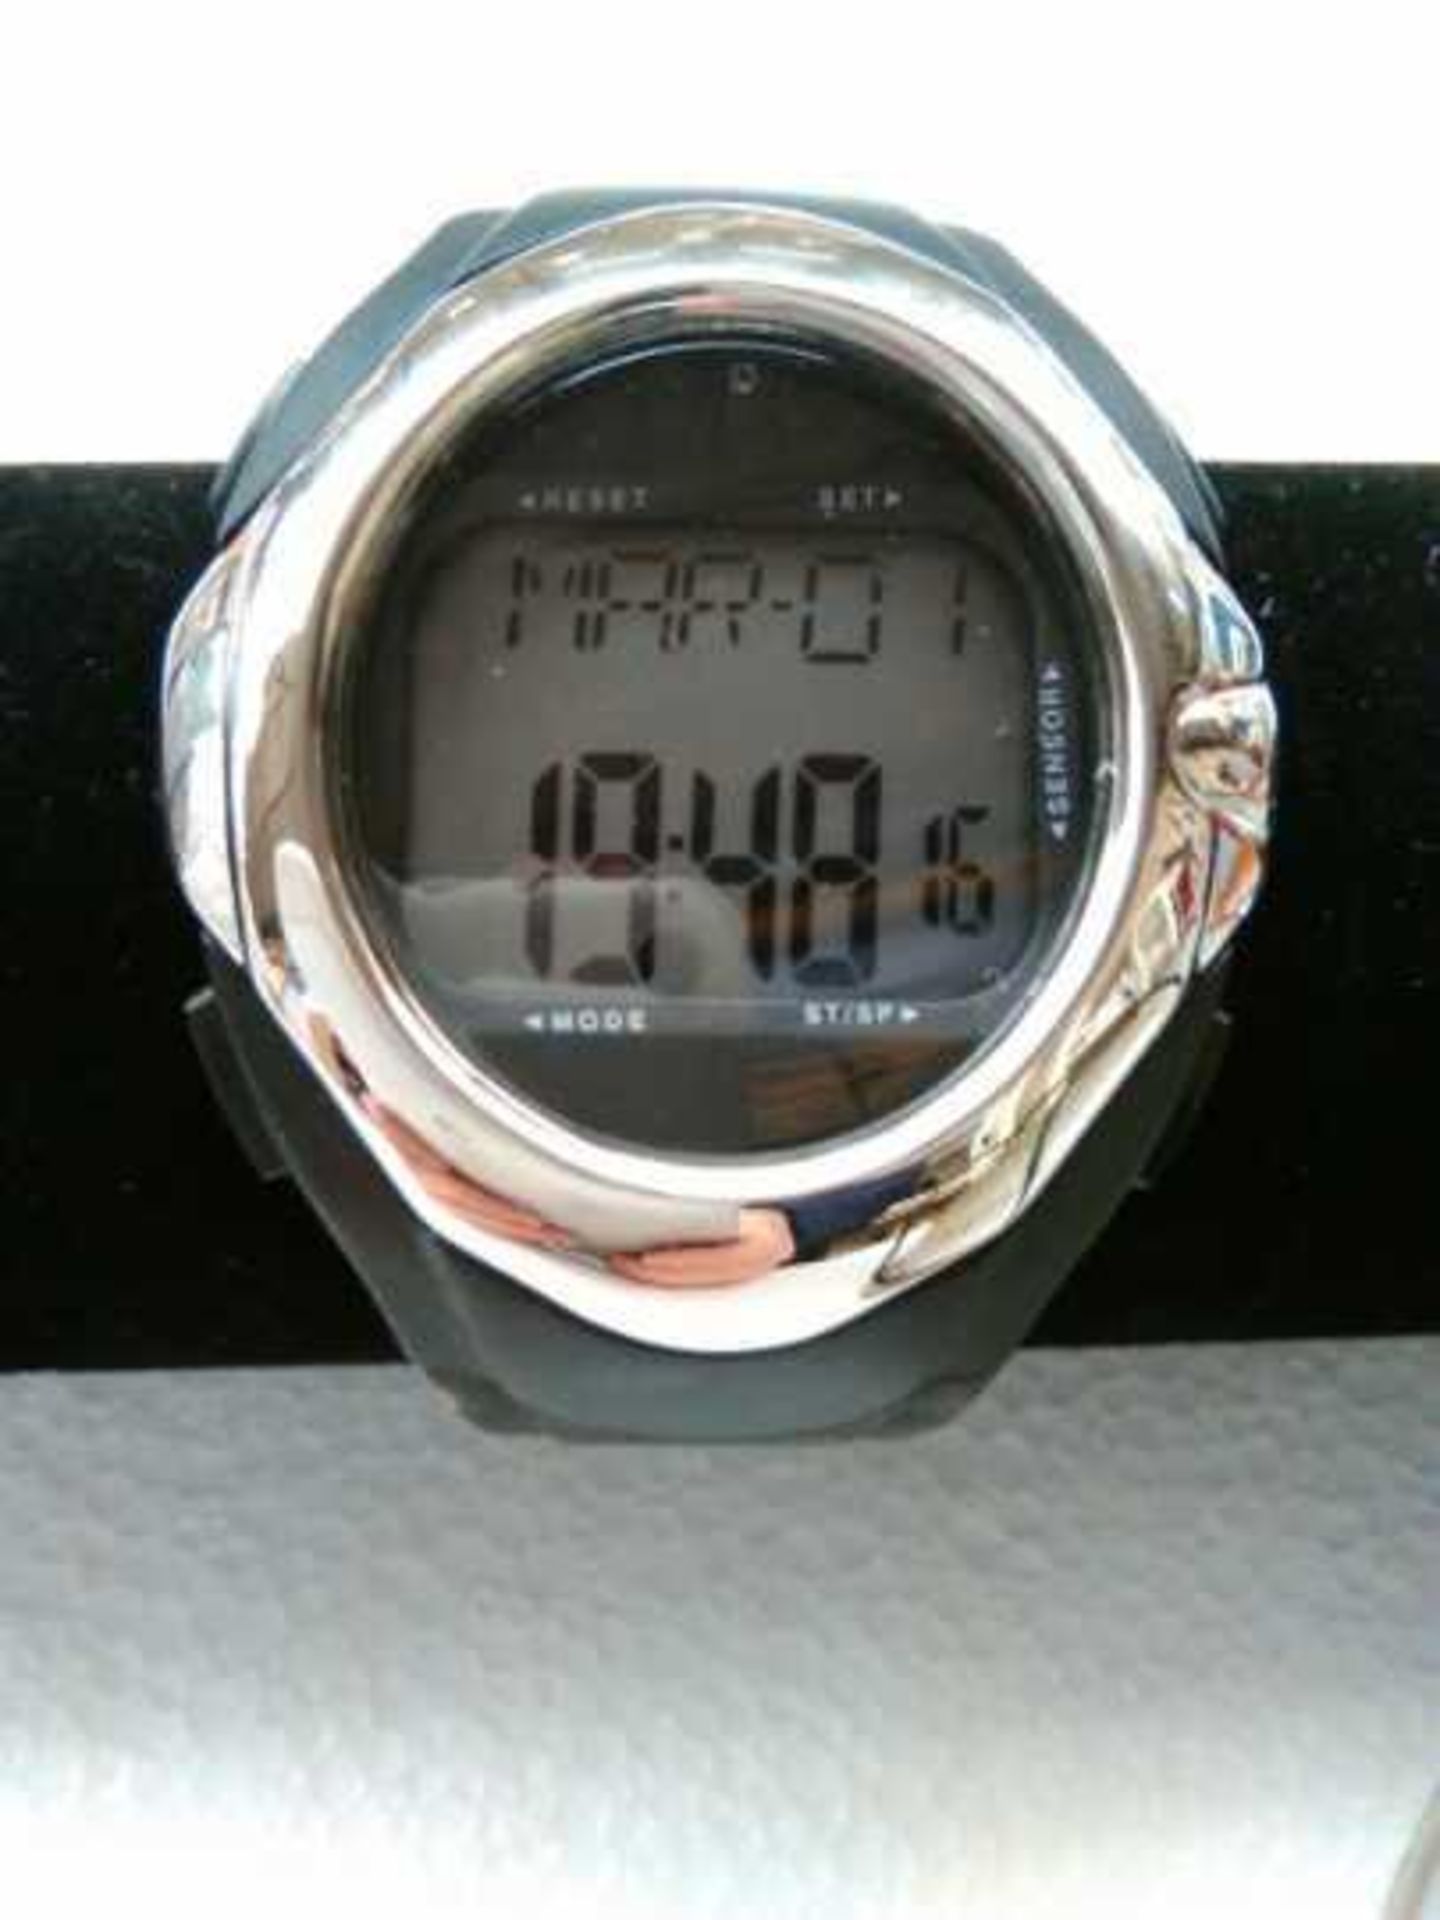 Designer Habitat Pulse rate watch, new and ticking.